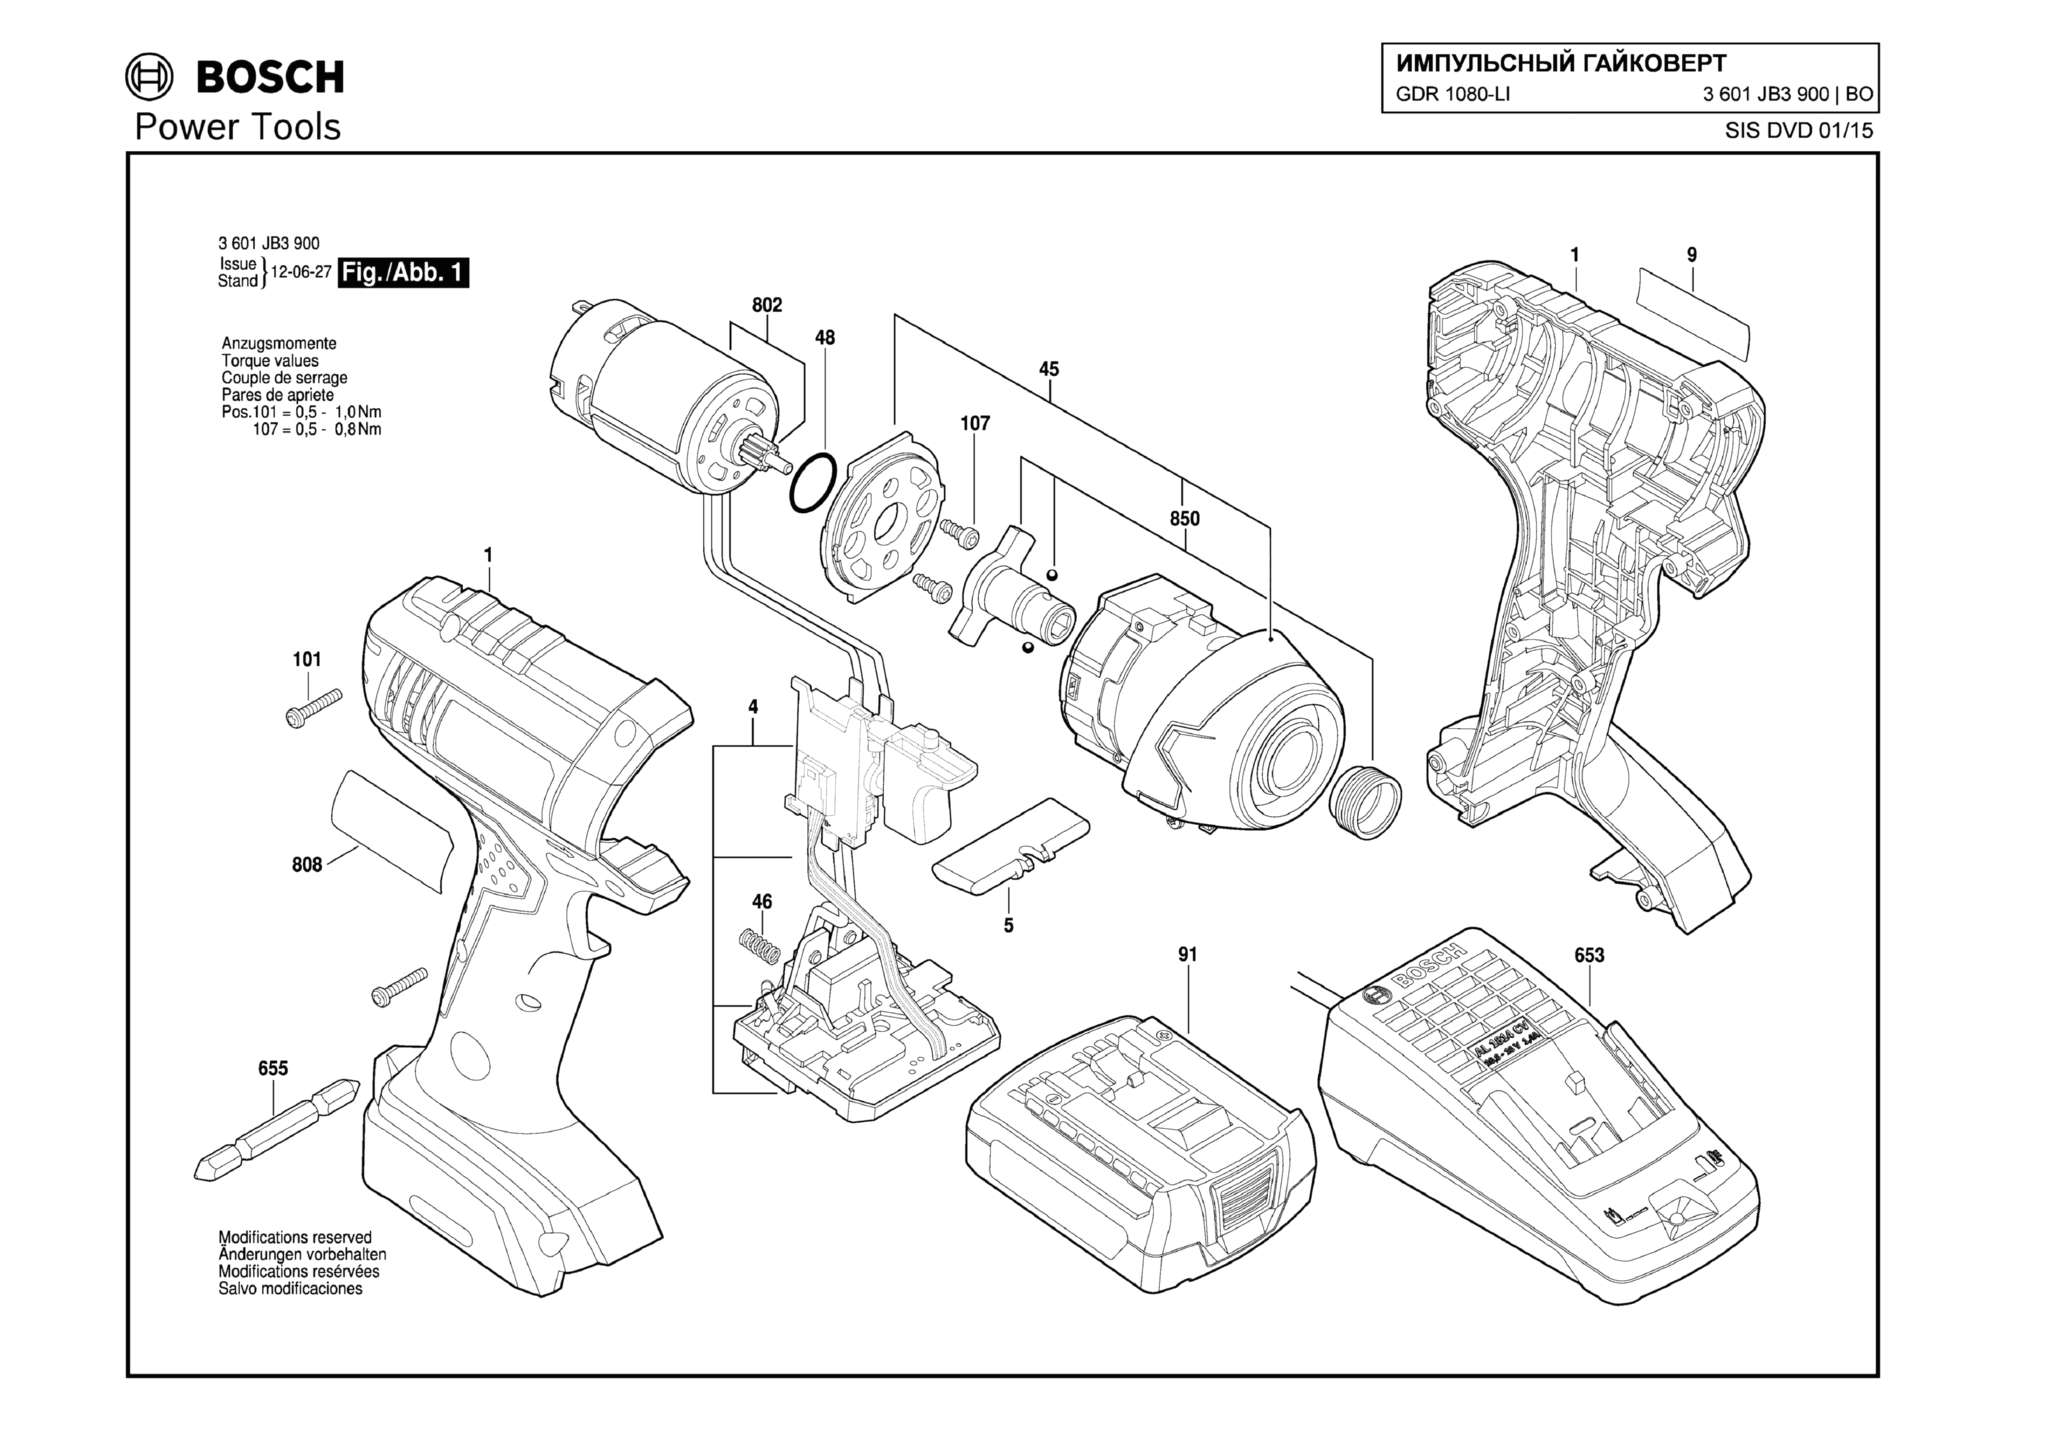 Запчасти, схема и деталировка Bosch GDR 1080-LI (ТИП 3601JB3900)